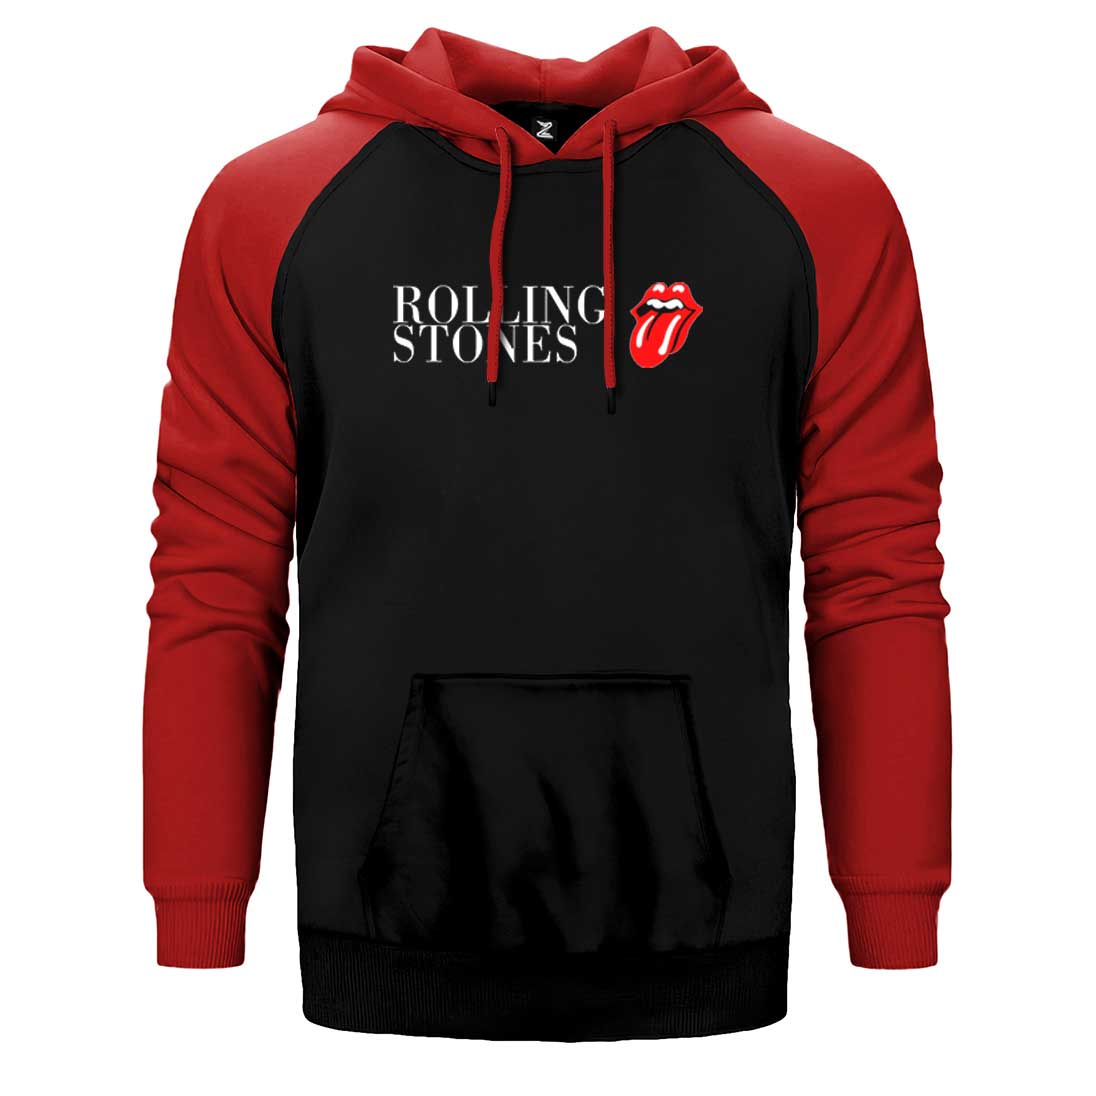 The Rolling Stones Logo Text Çift Renk Reglan Kol Sweatshirt / Hoodie